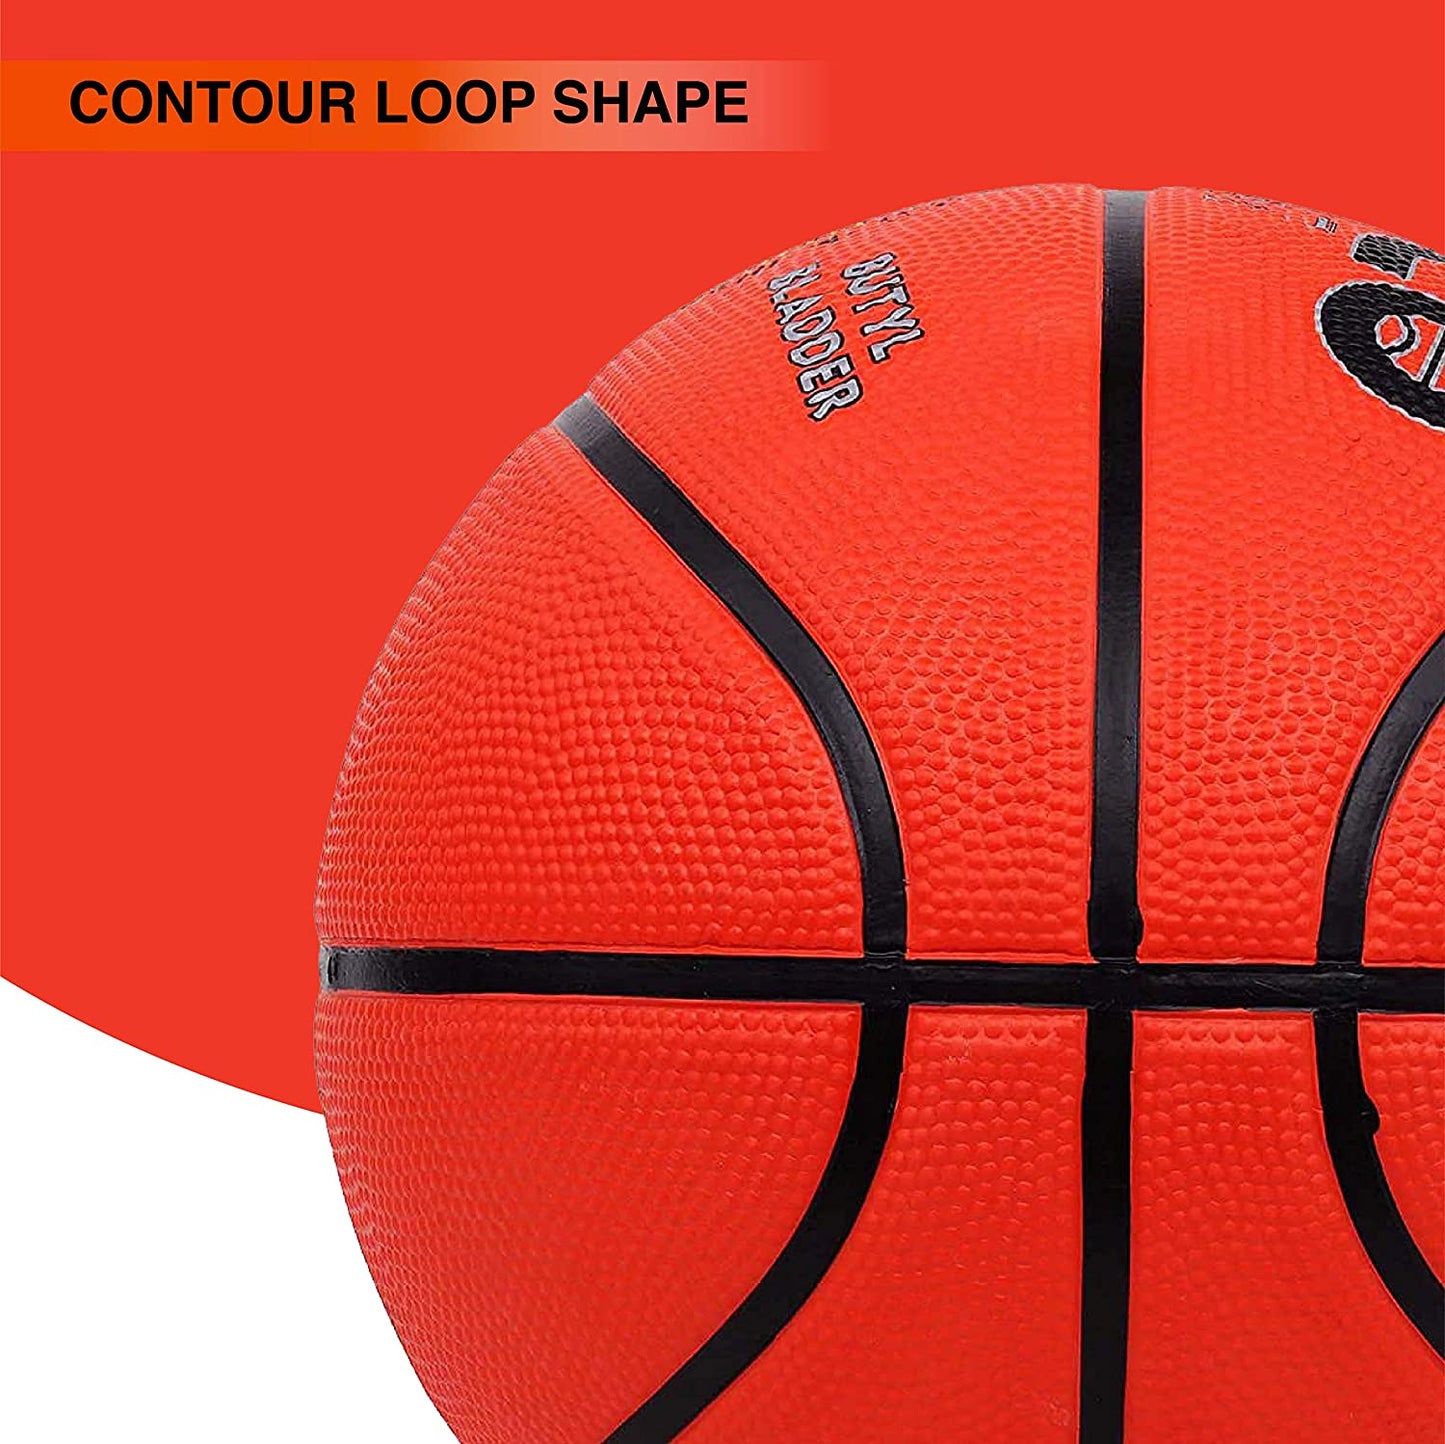 Cosco Hi-Grip Basketball - Orange - Best Price online Prokicksports.com